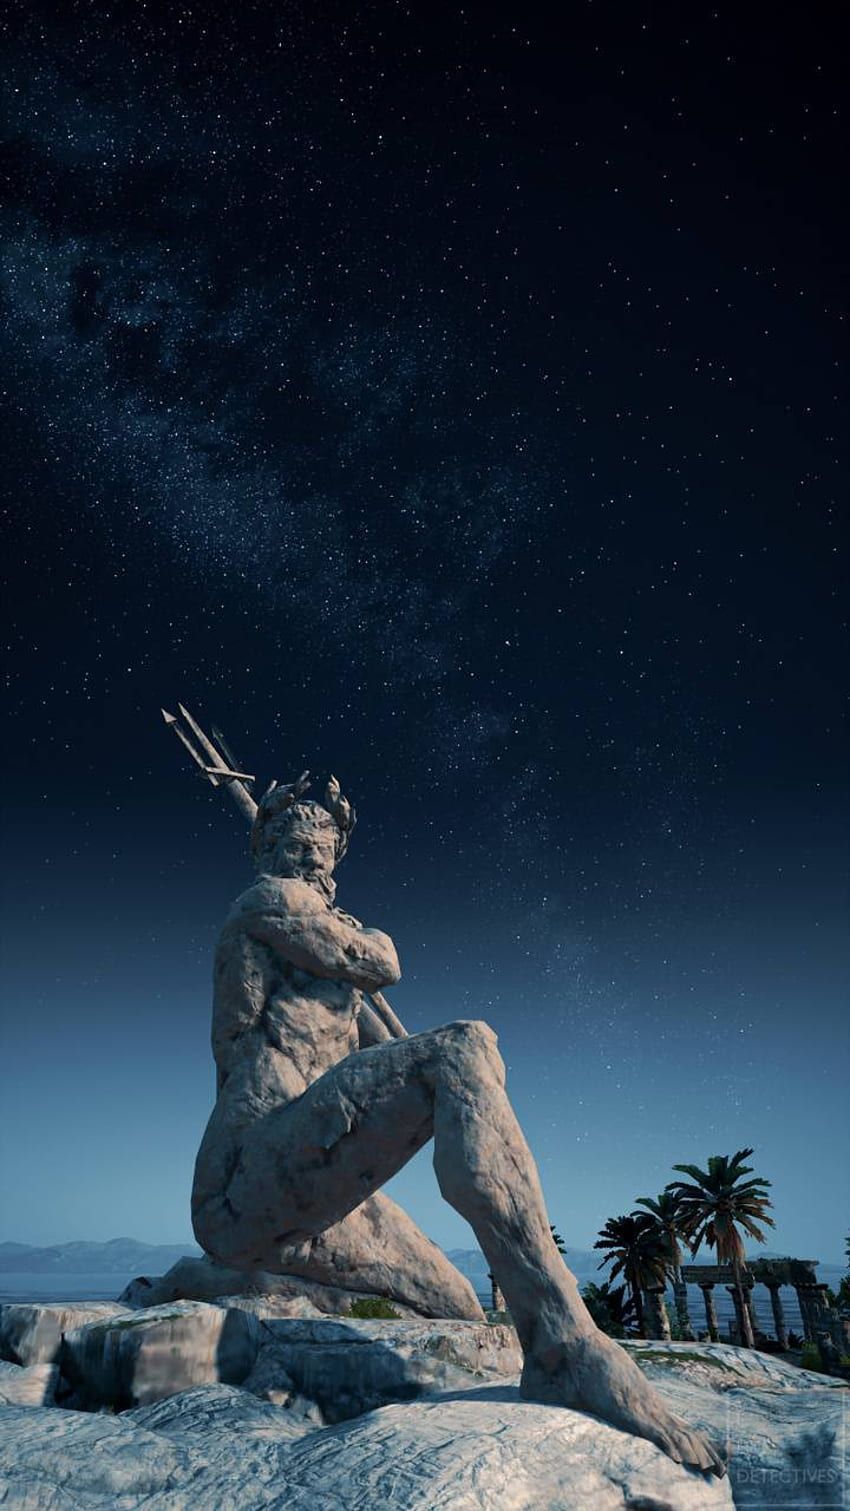 A statue of an angel on top - Greek mythology